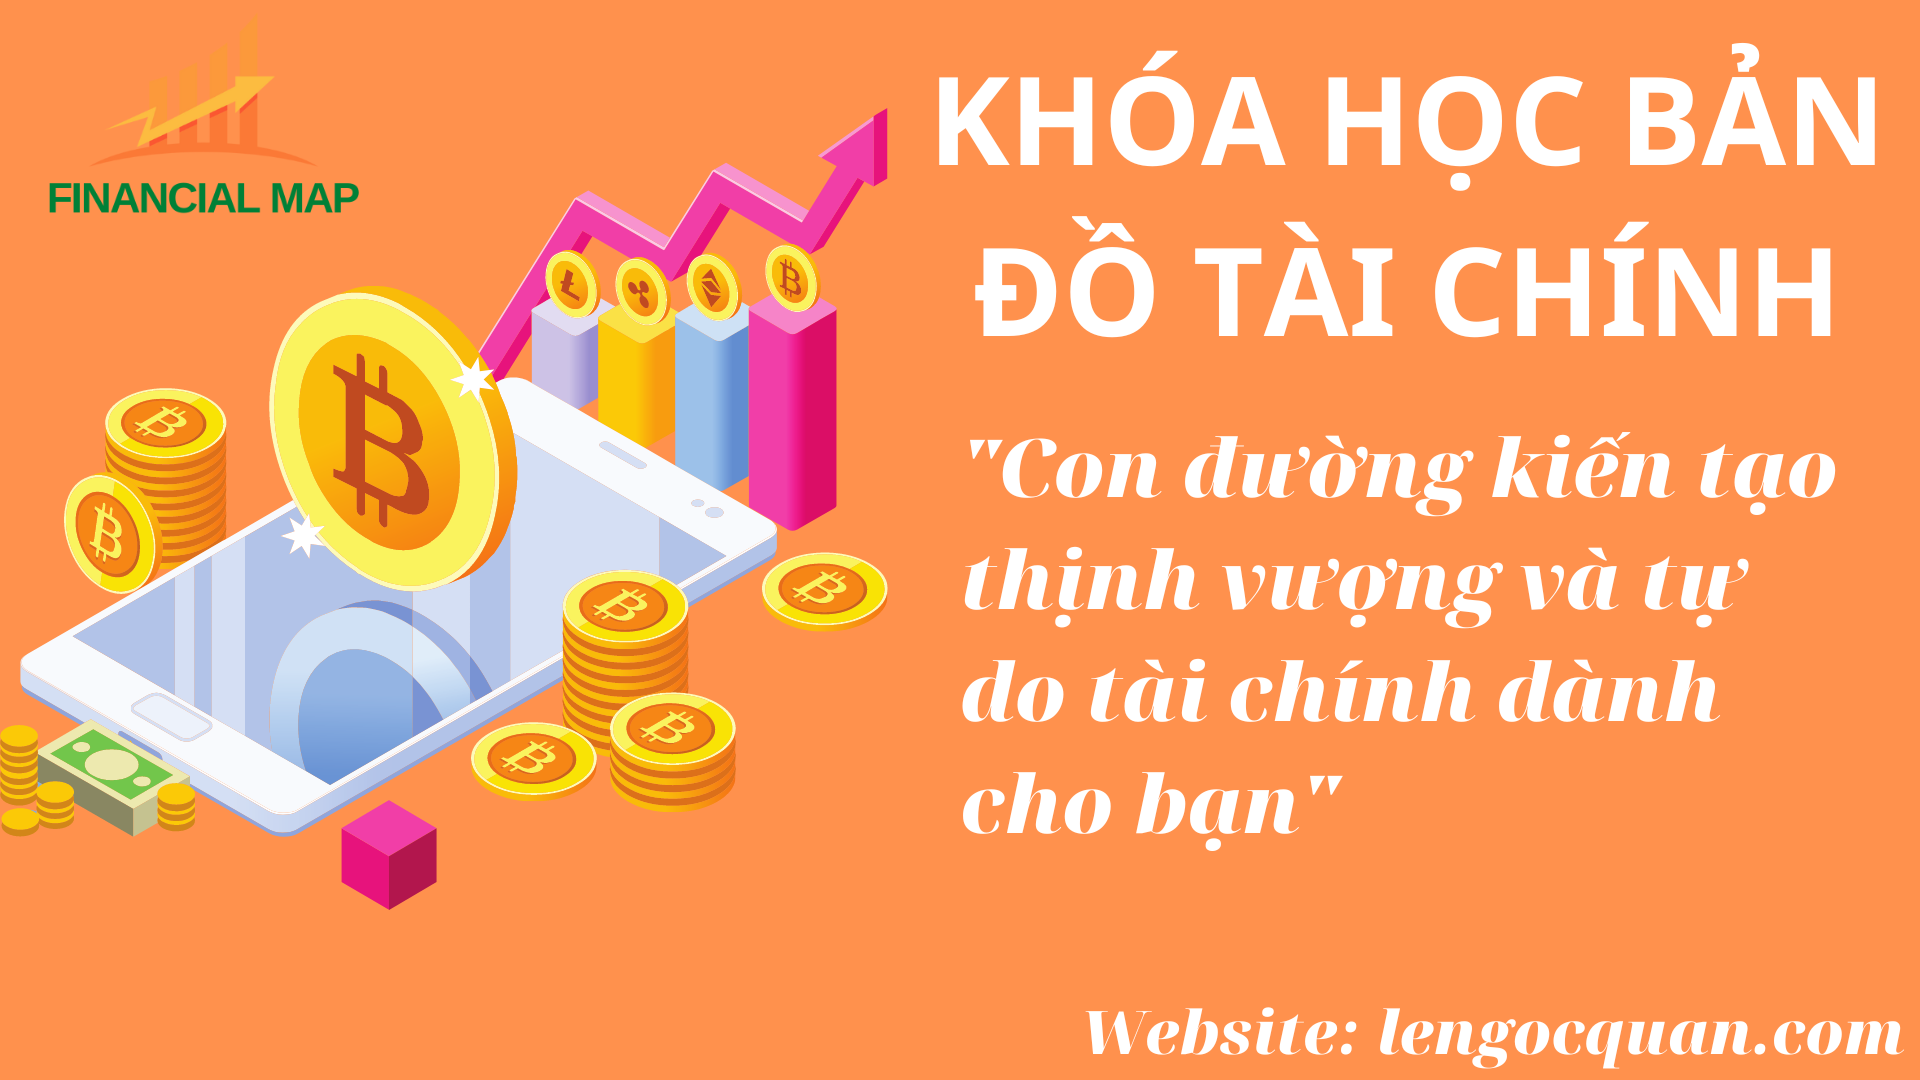 Ban do tai chinh-Le Ngoc Quan